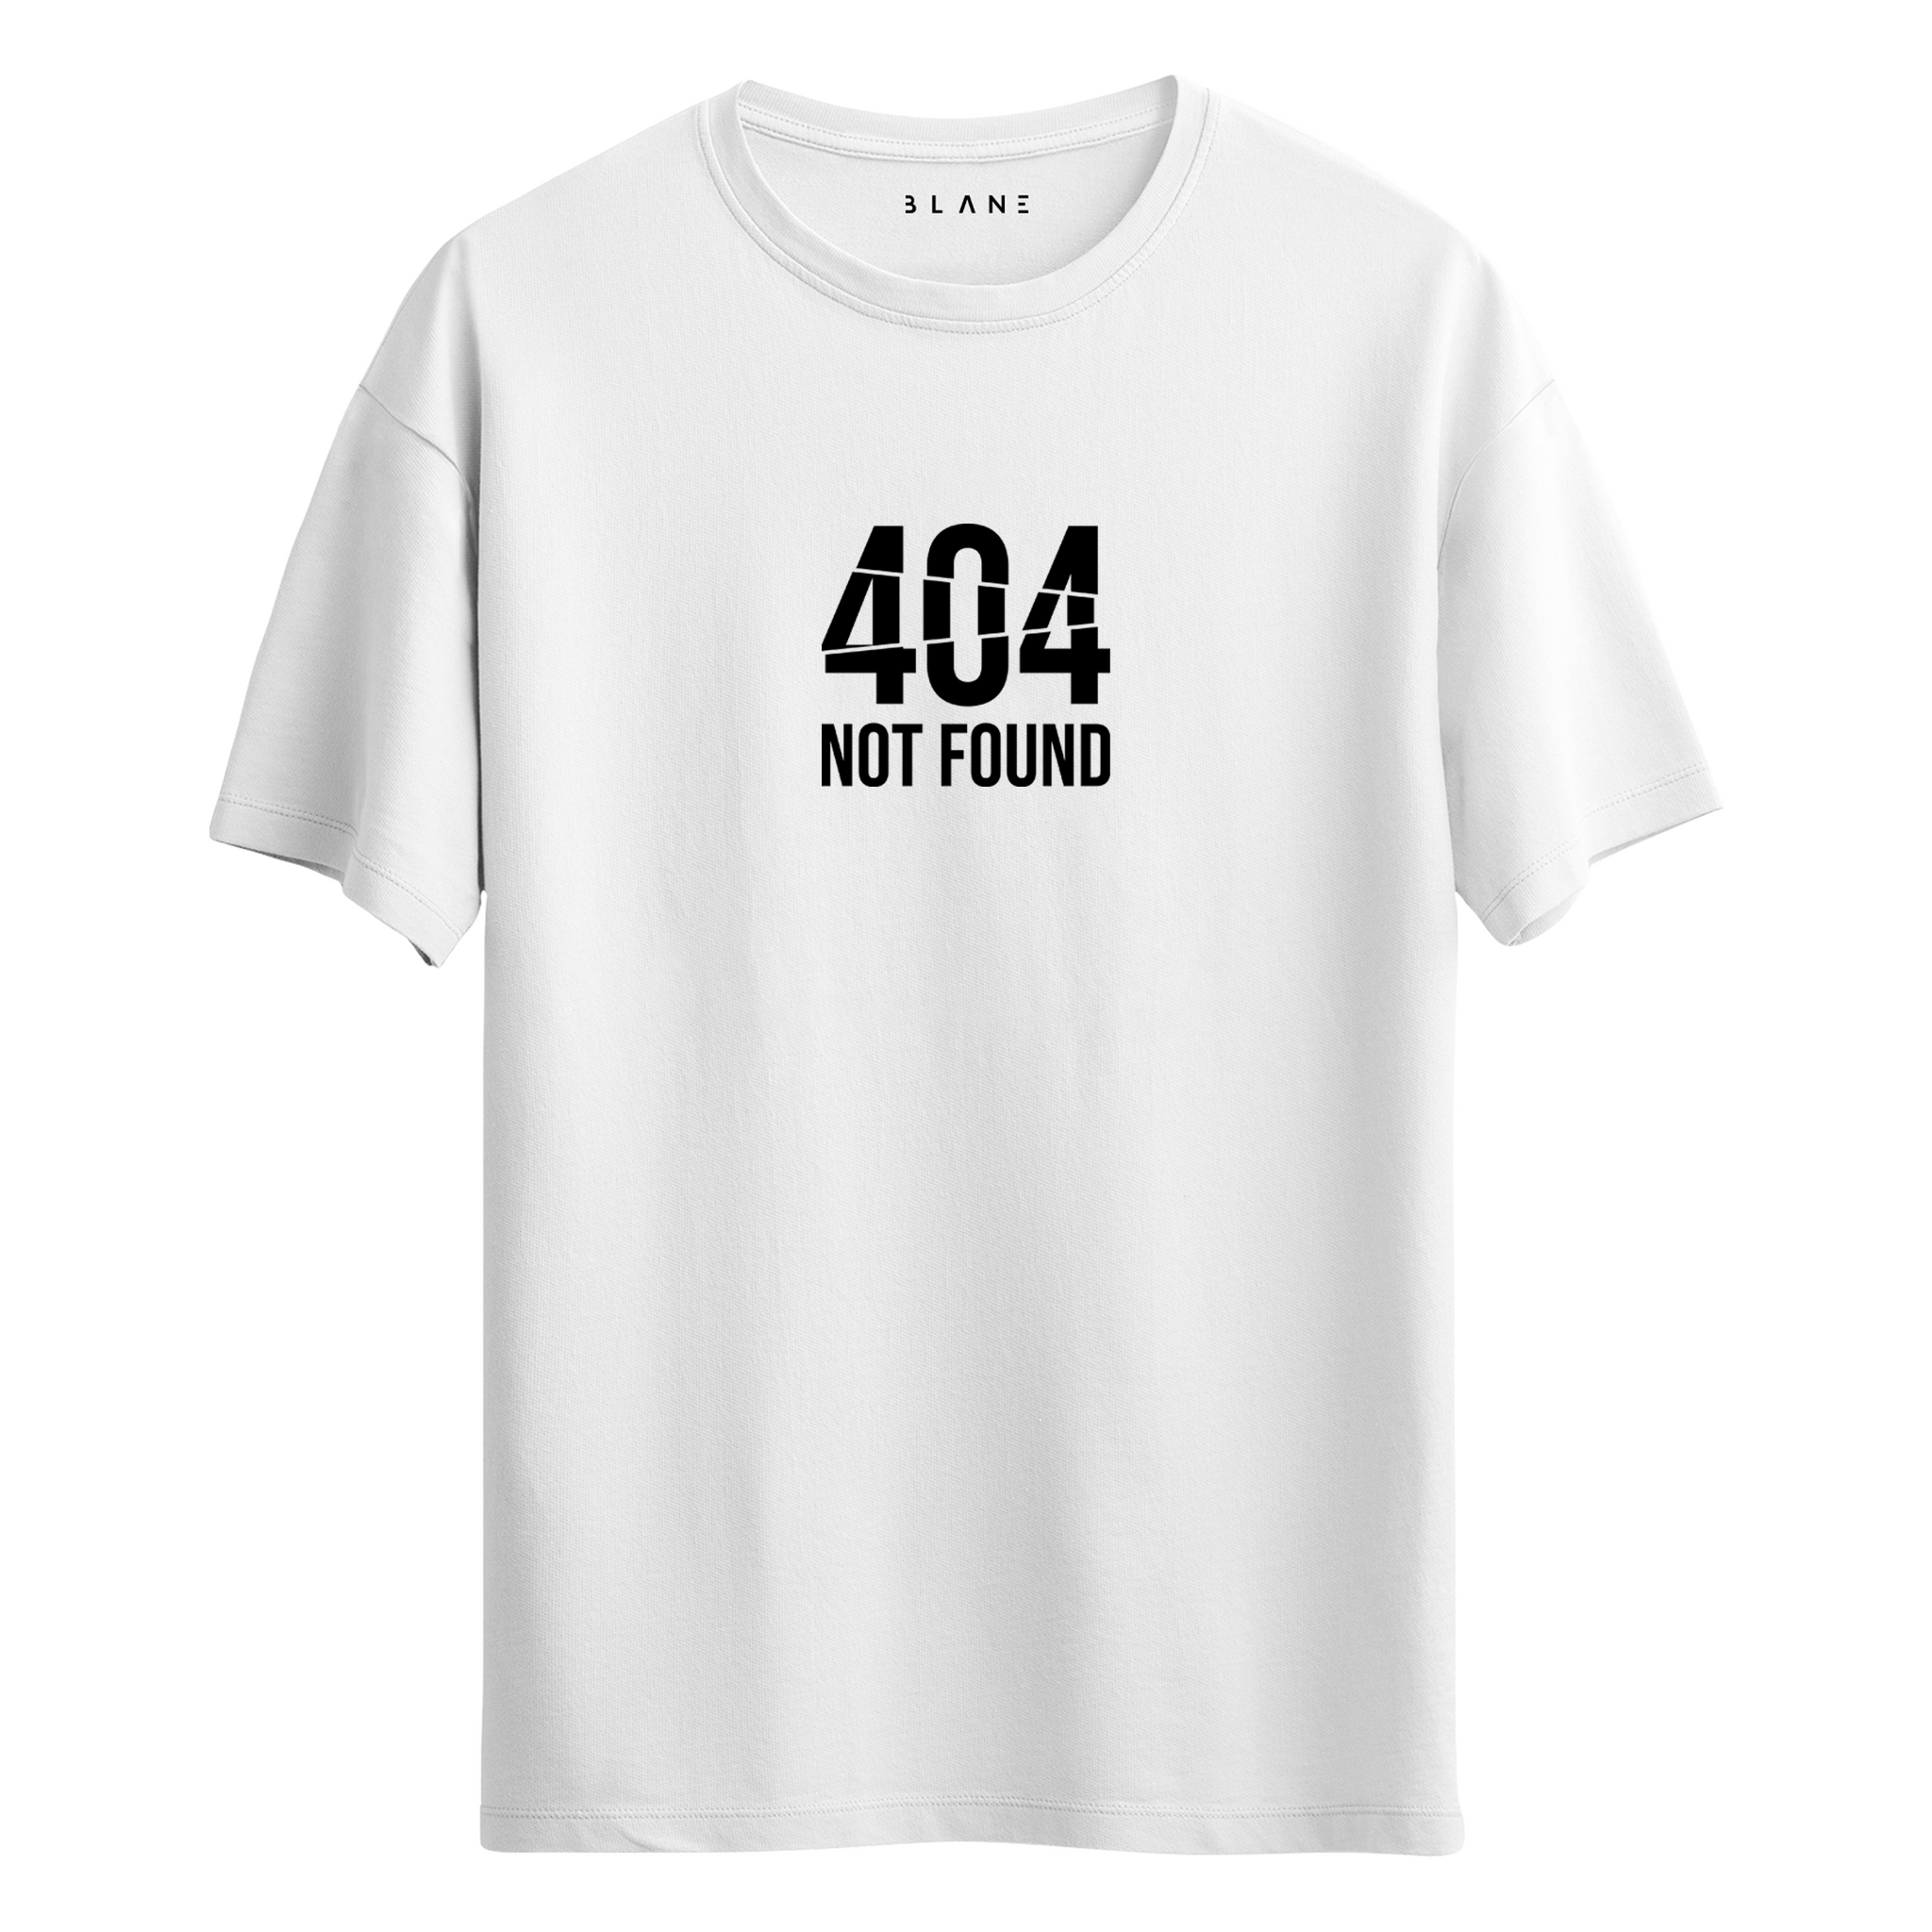 404 Not Found - T-Shirt